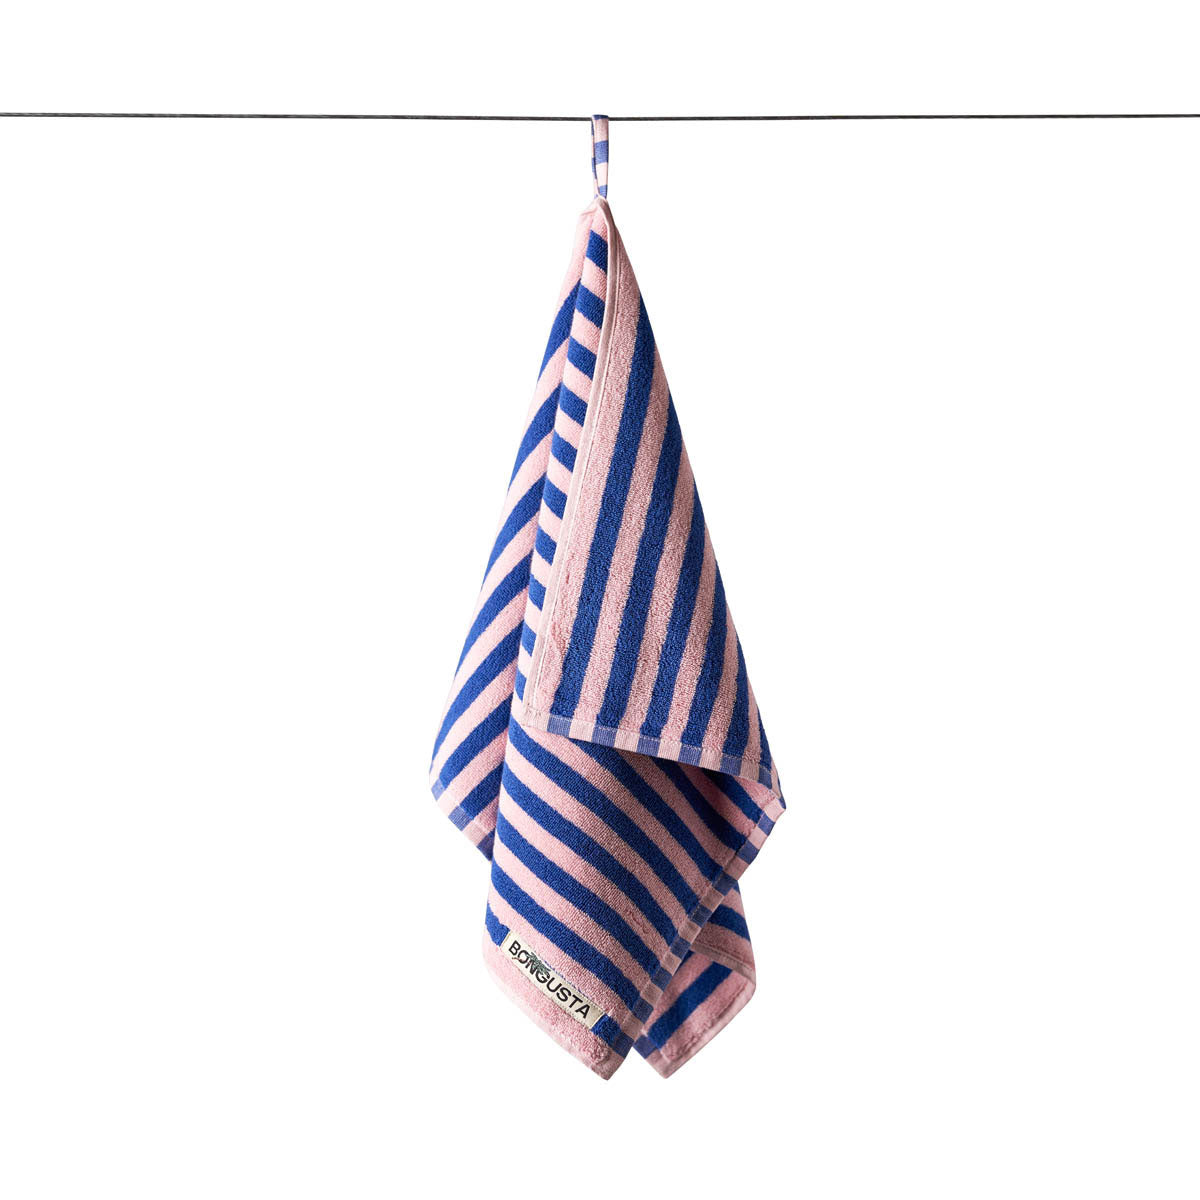 Bongusta Naram Towels - Dazzling Blue and Rose